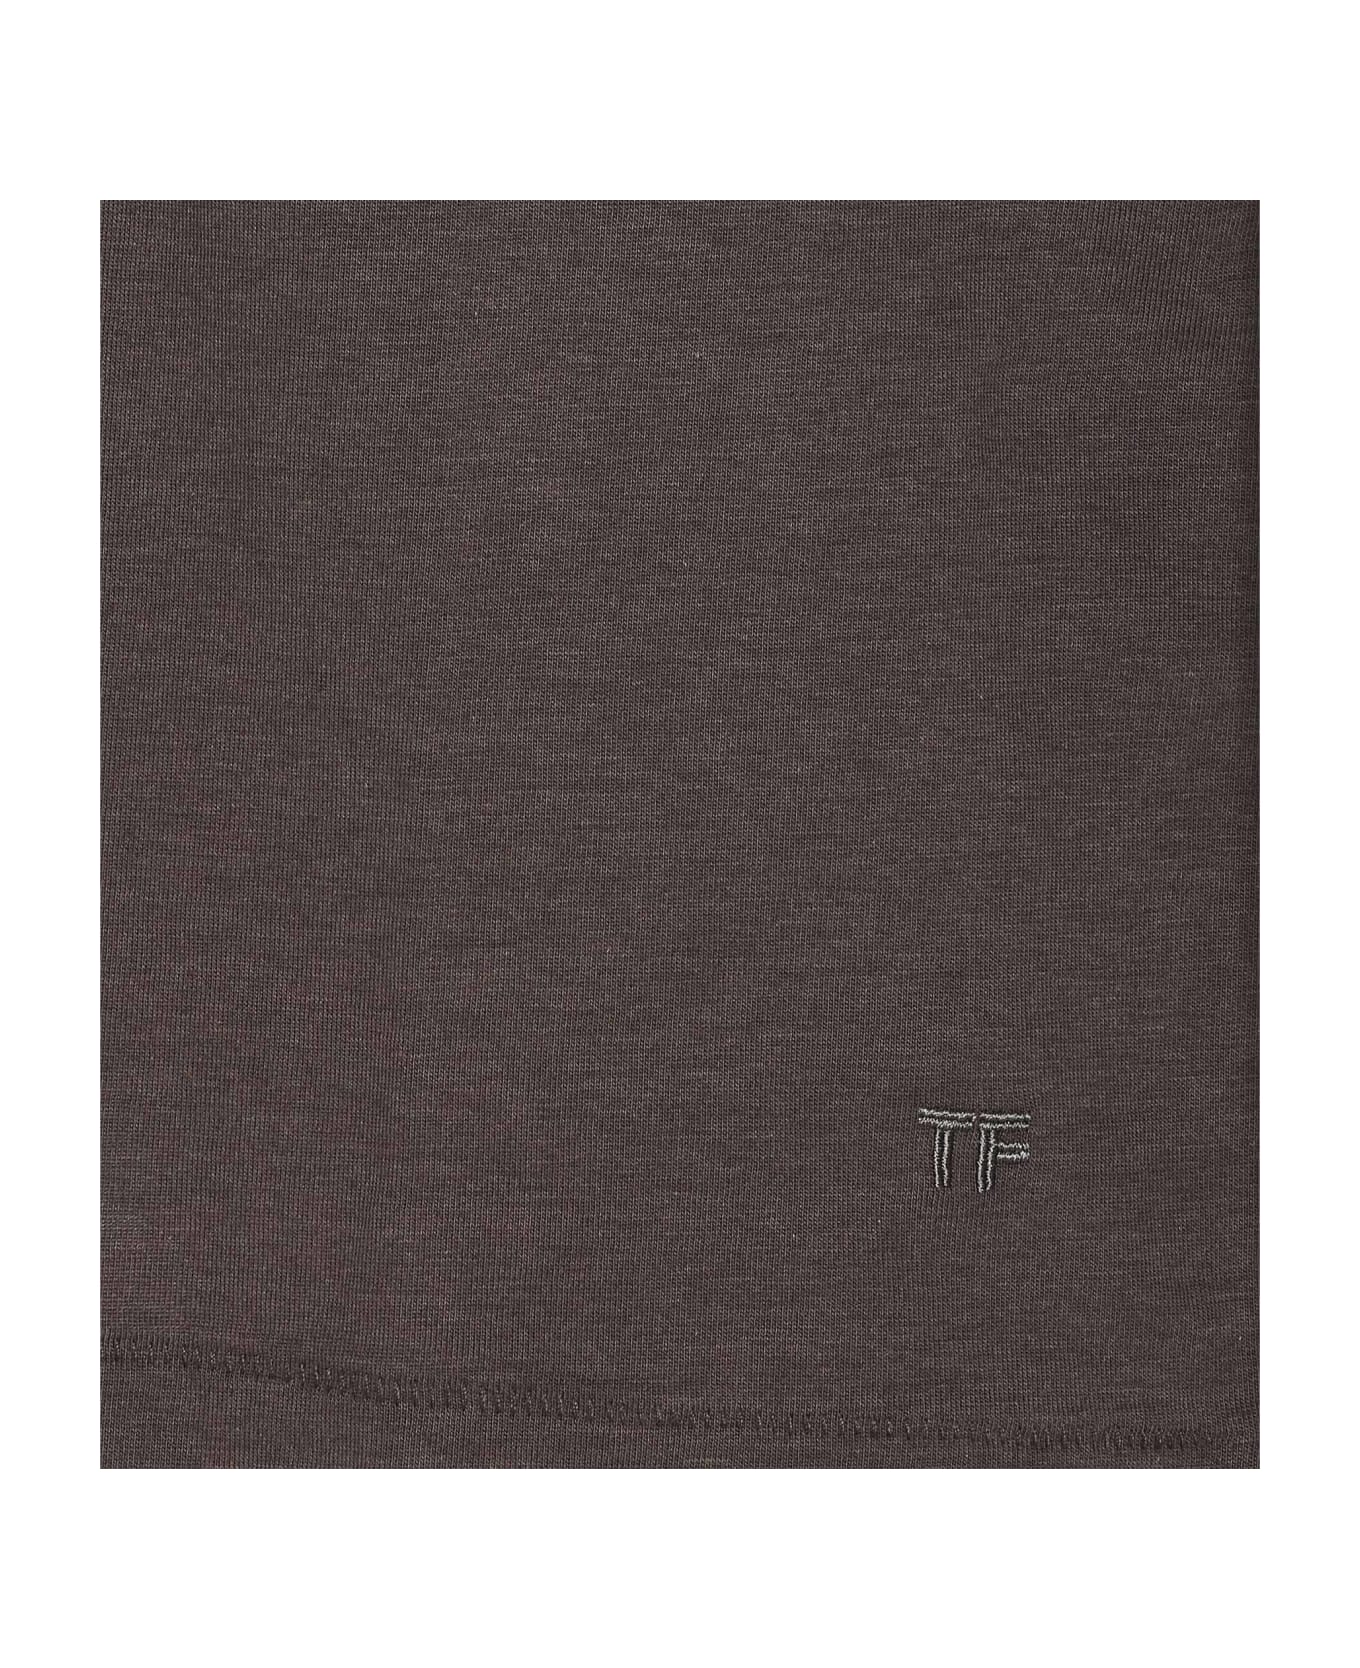 Tom Ford T-shirt - Grey シャツ